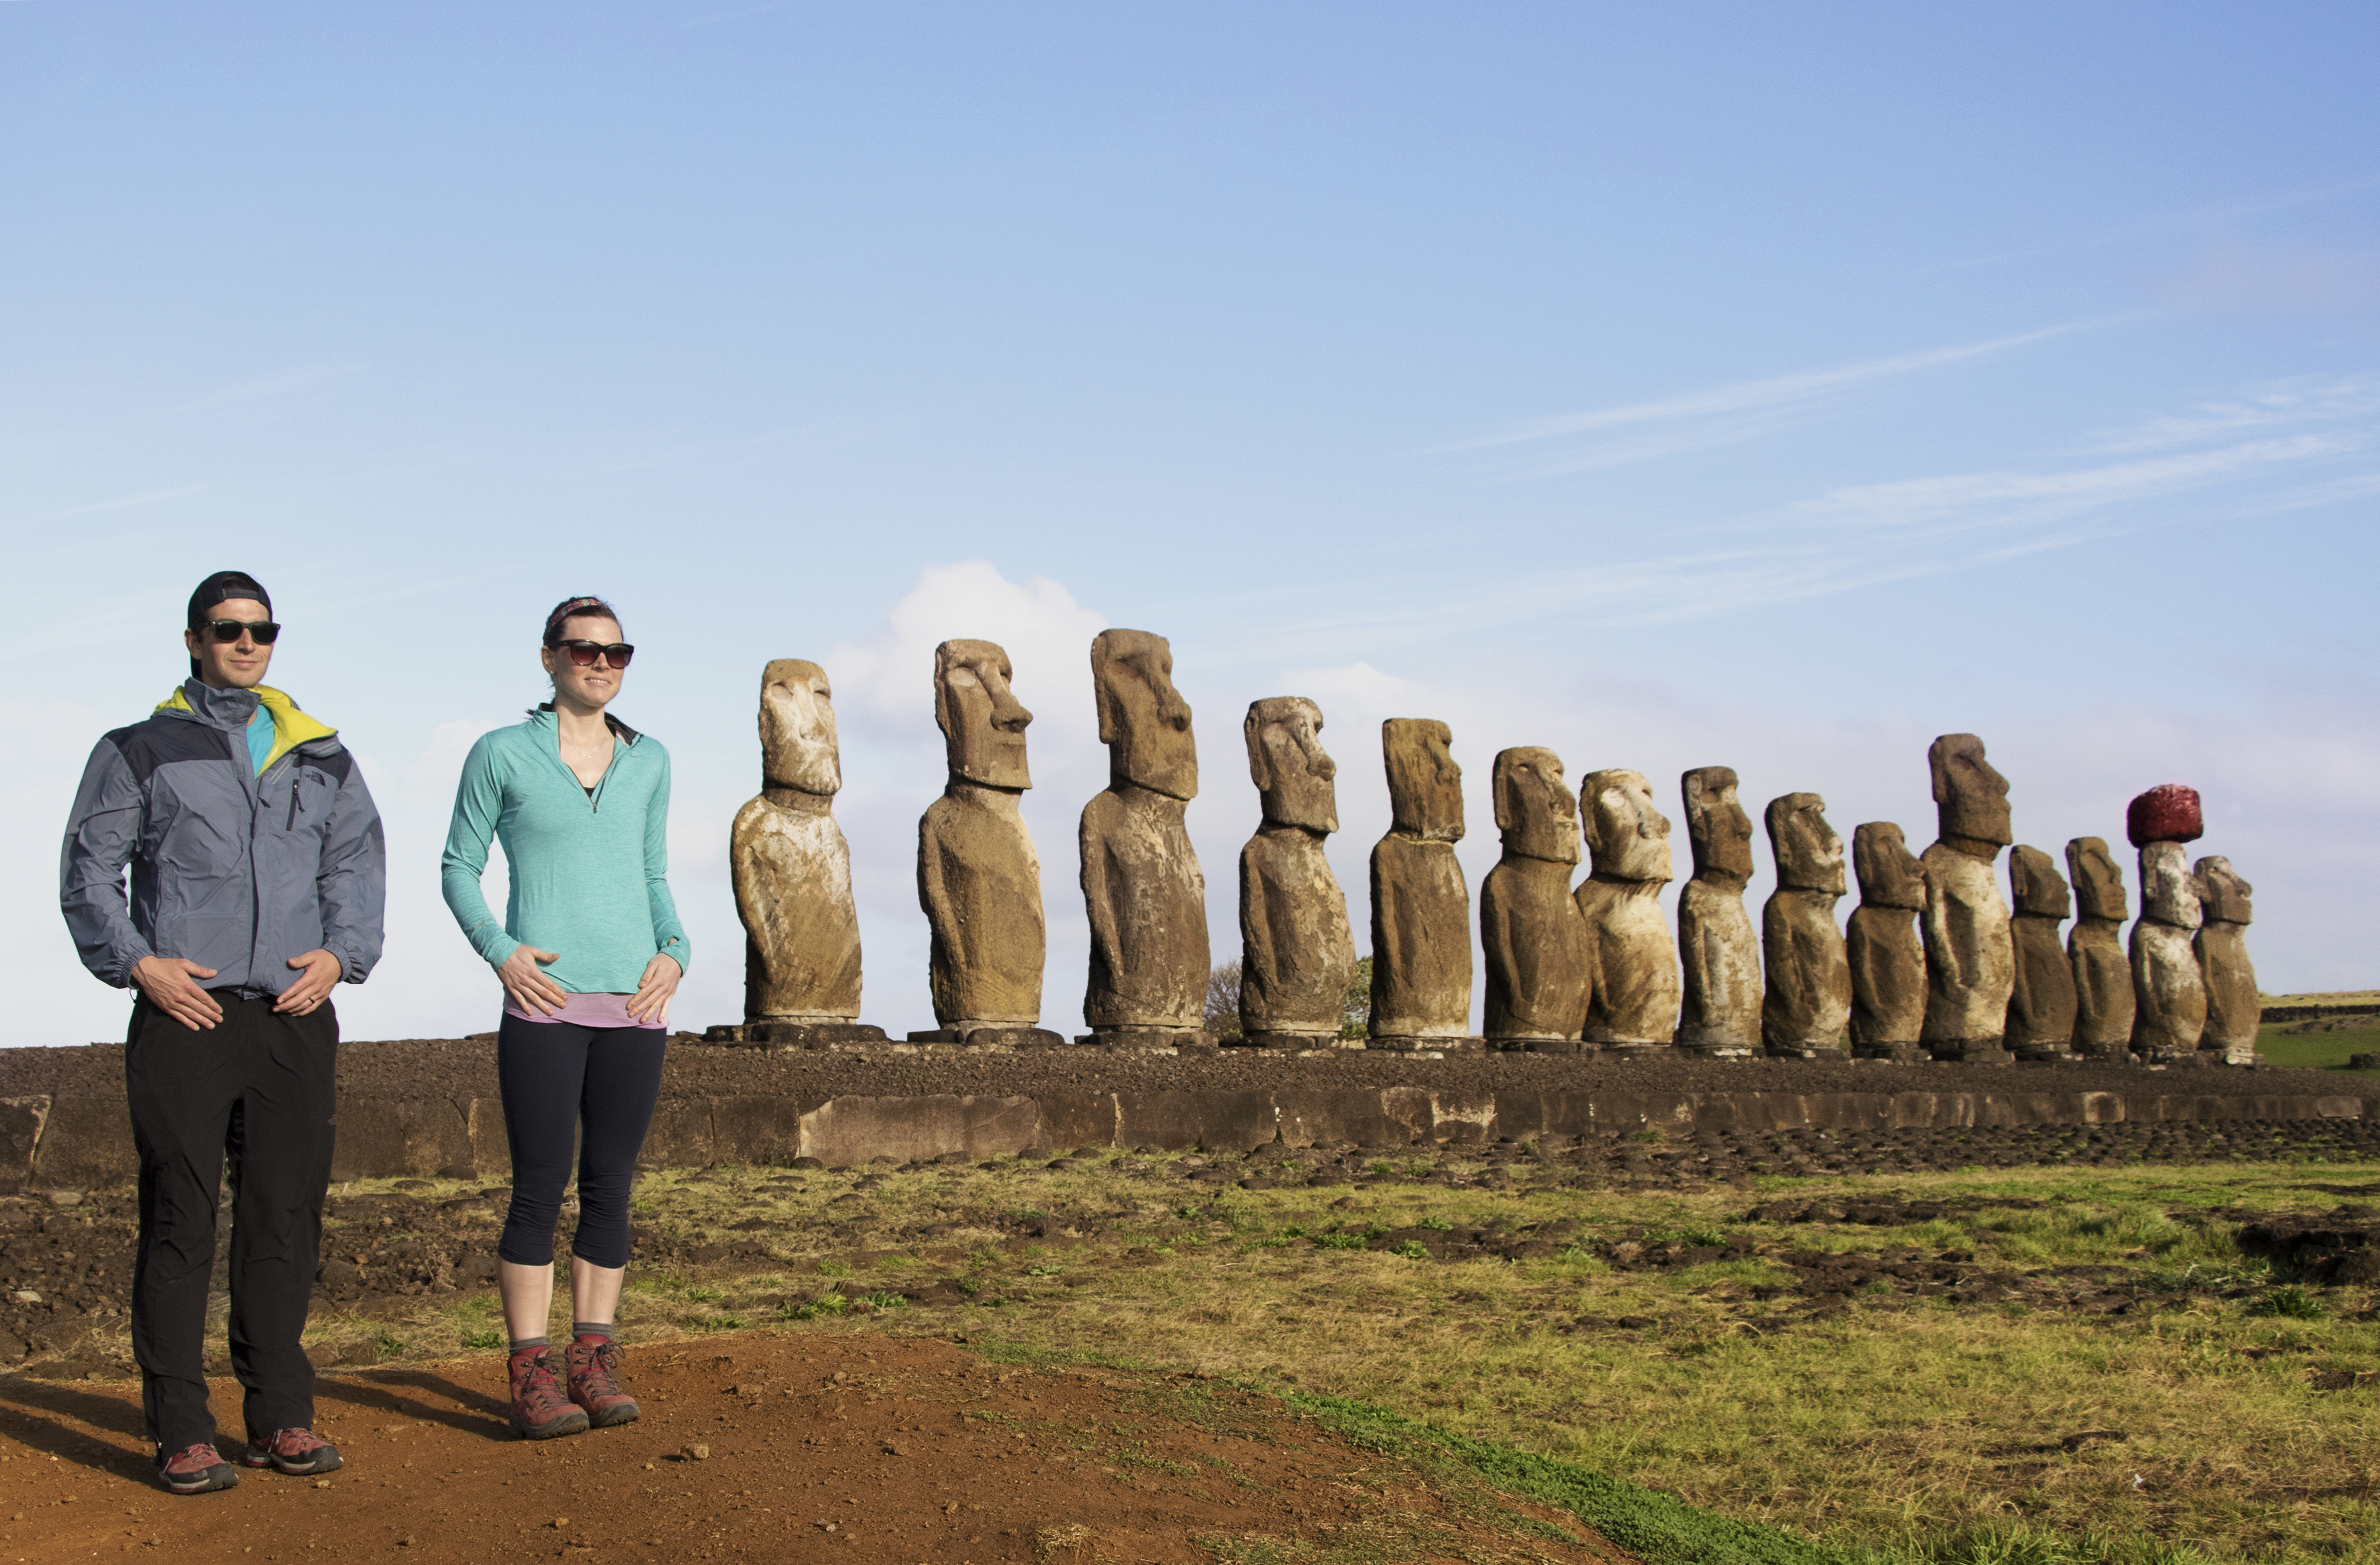 Being Moai